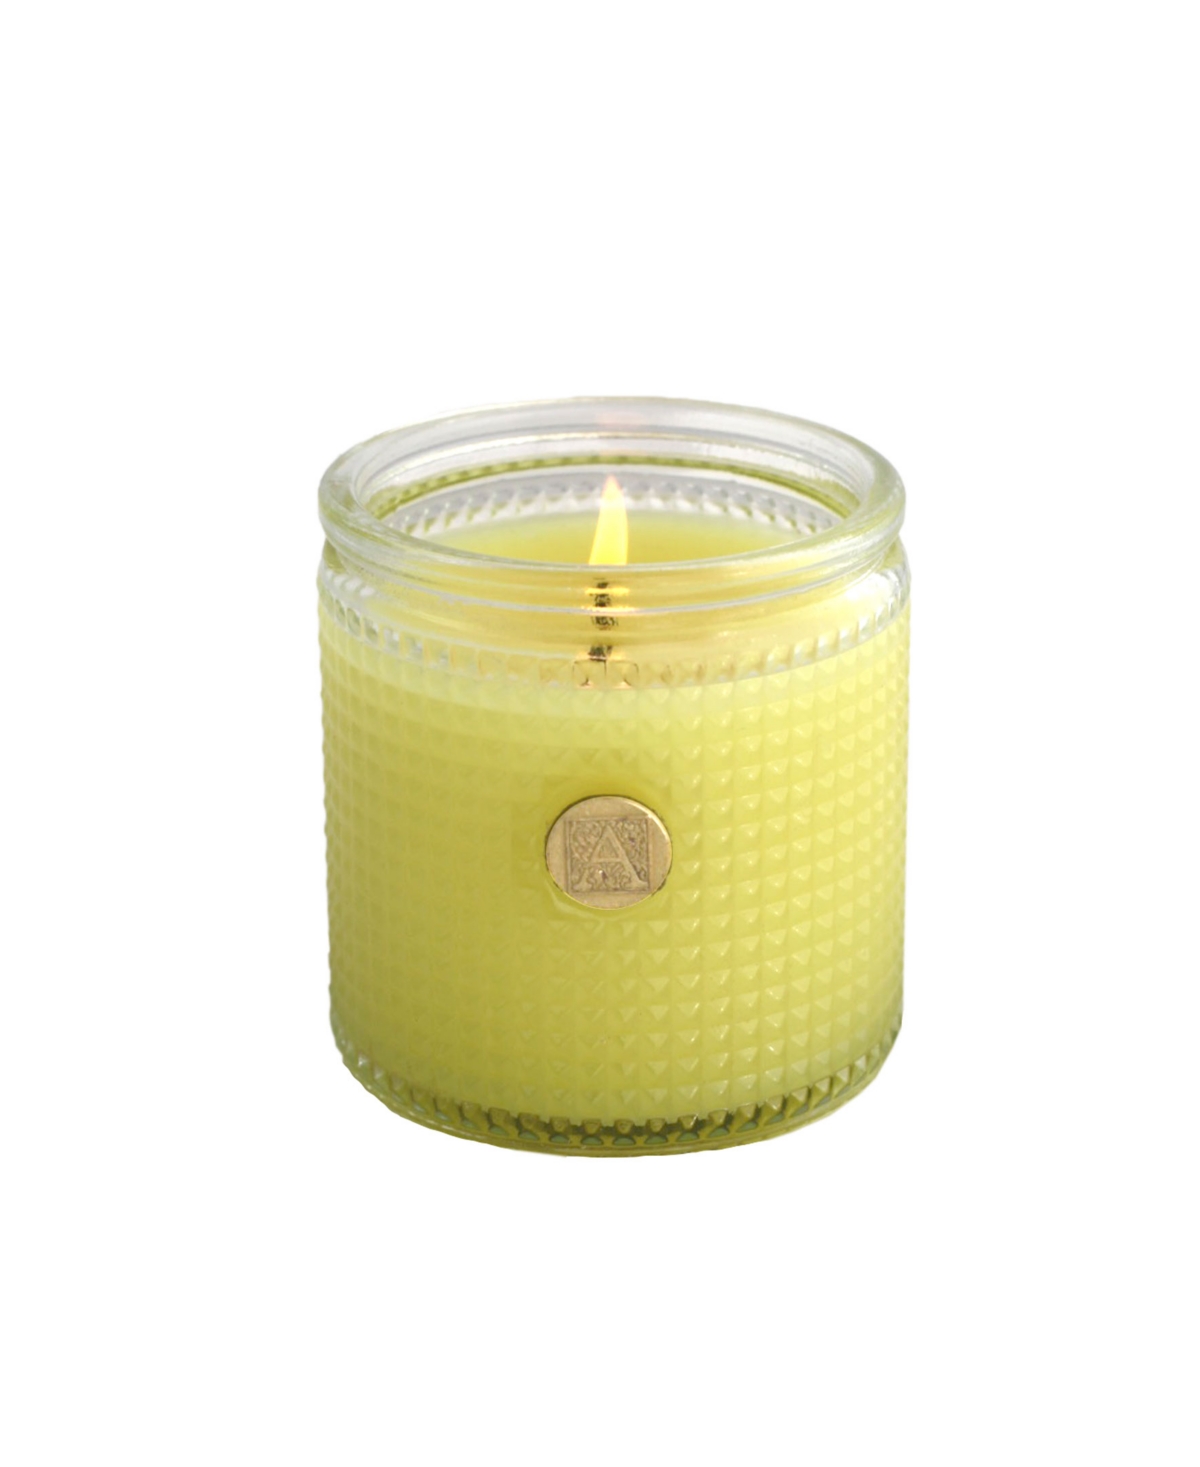 Elegant Essentials Lemon Basil Textured Candle, 6 oz - Medium Yellow